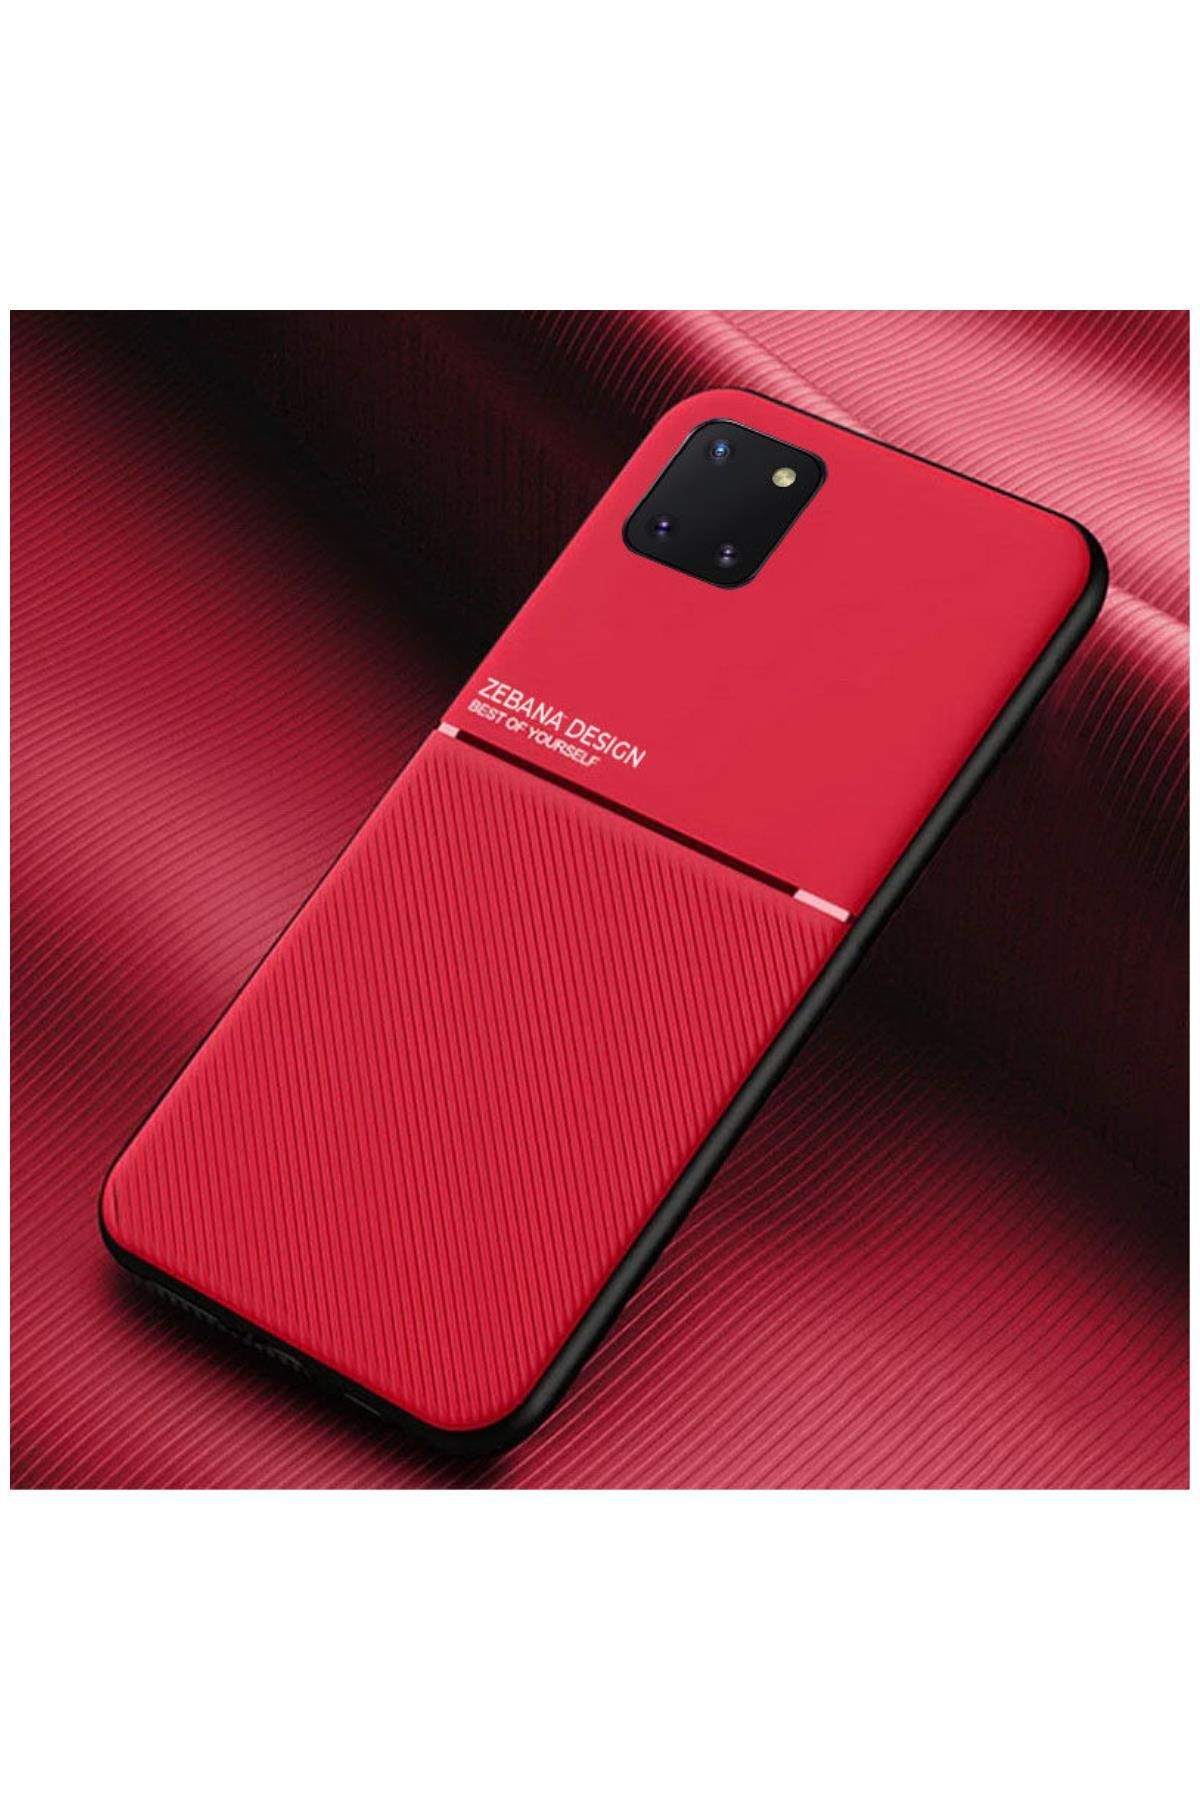 Zebana Samsung Galaxy Note 10 Lite Uyumlu Kılıf Design Silikon Kılıf Kırmızı